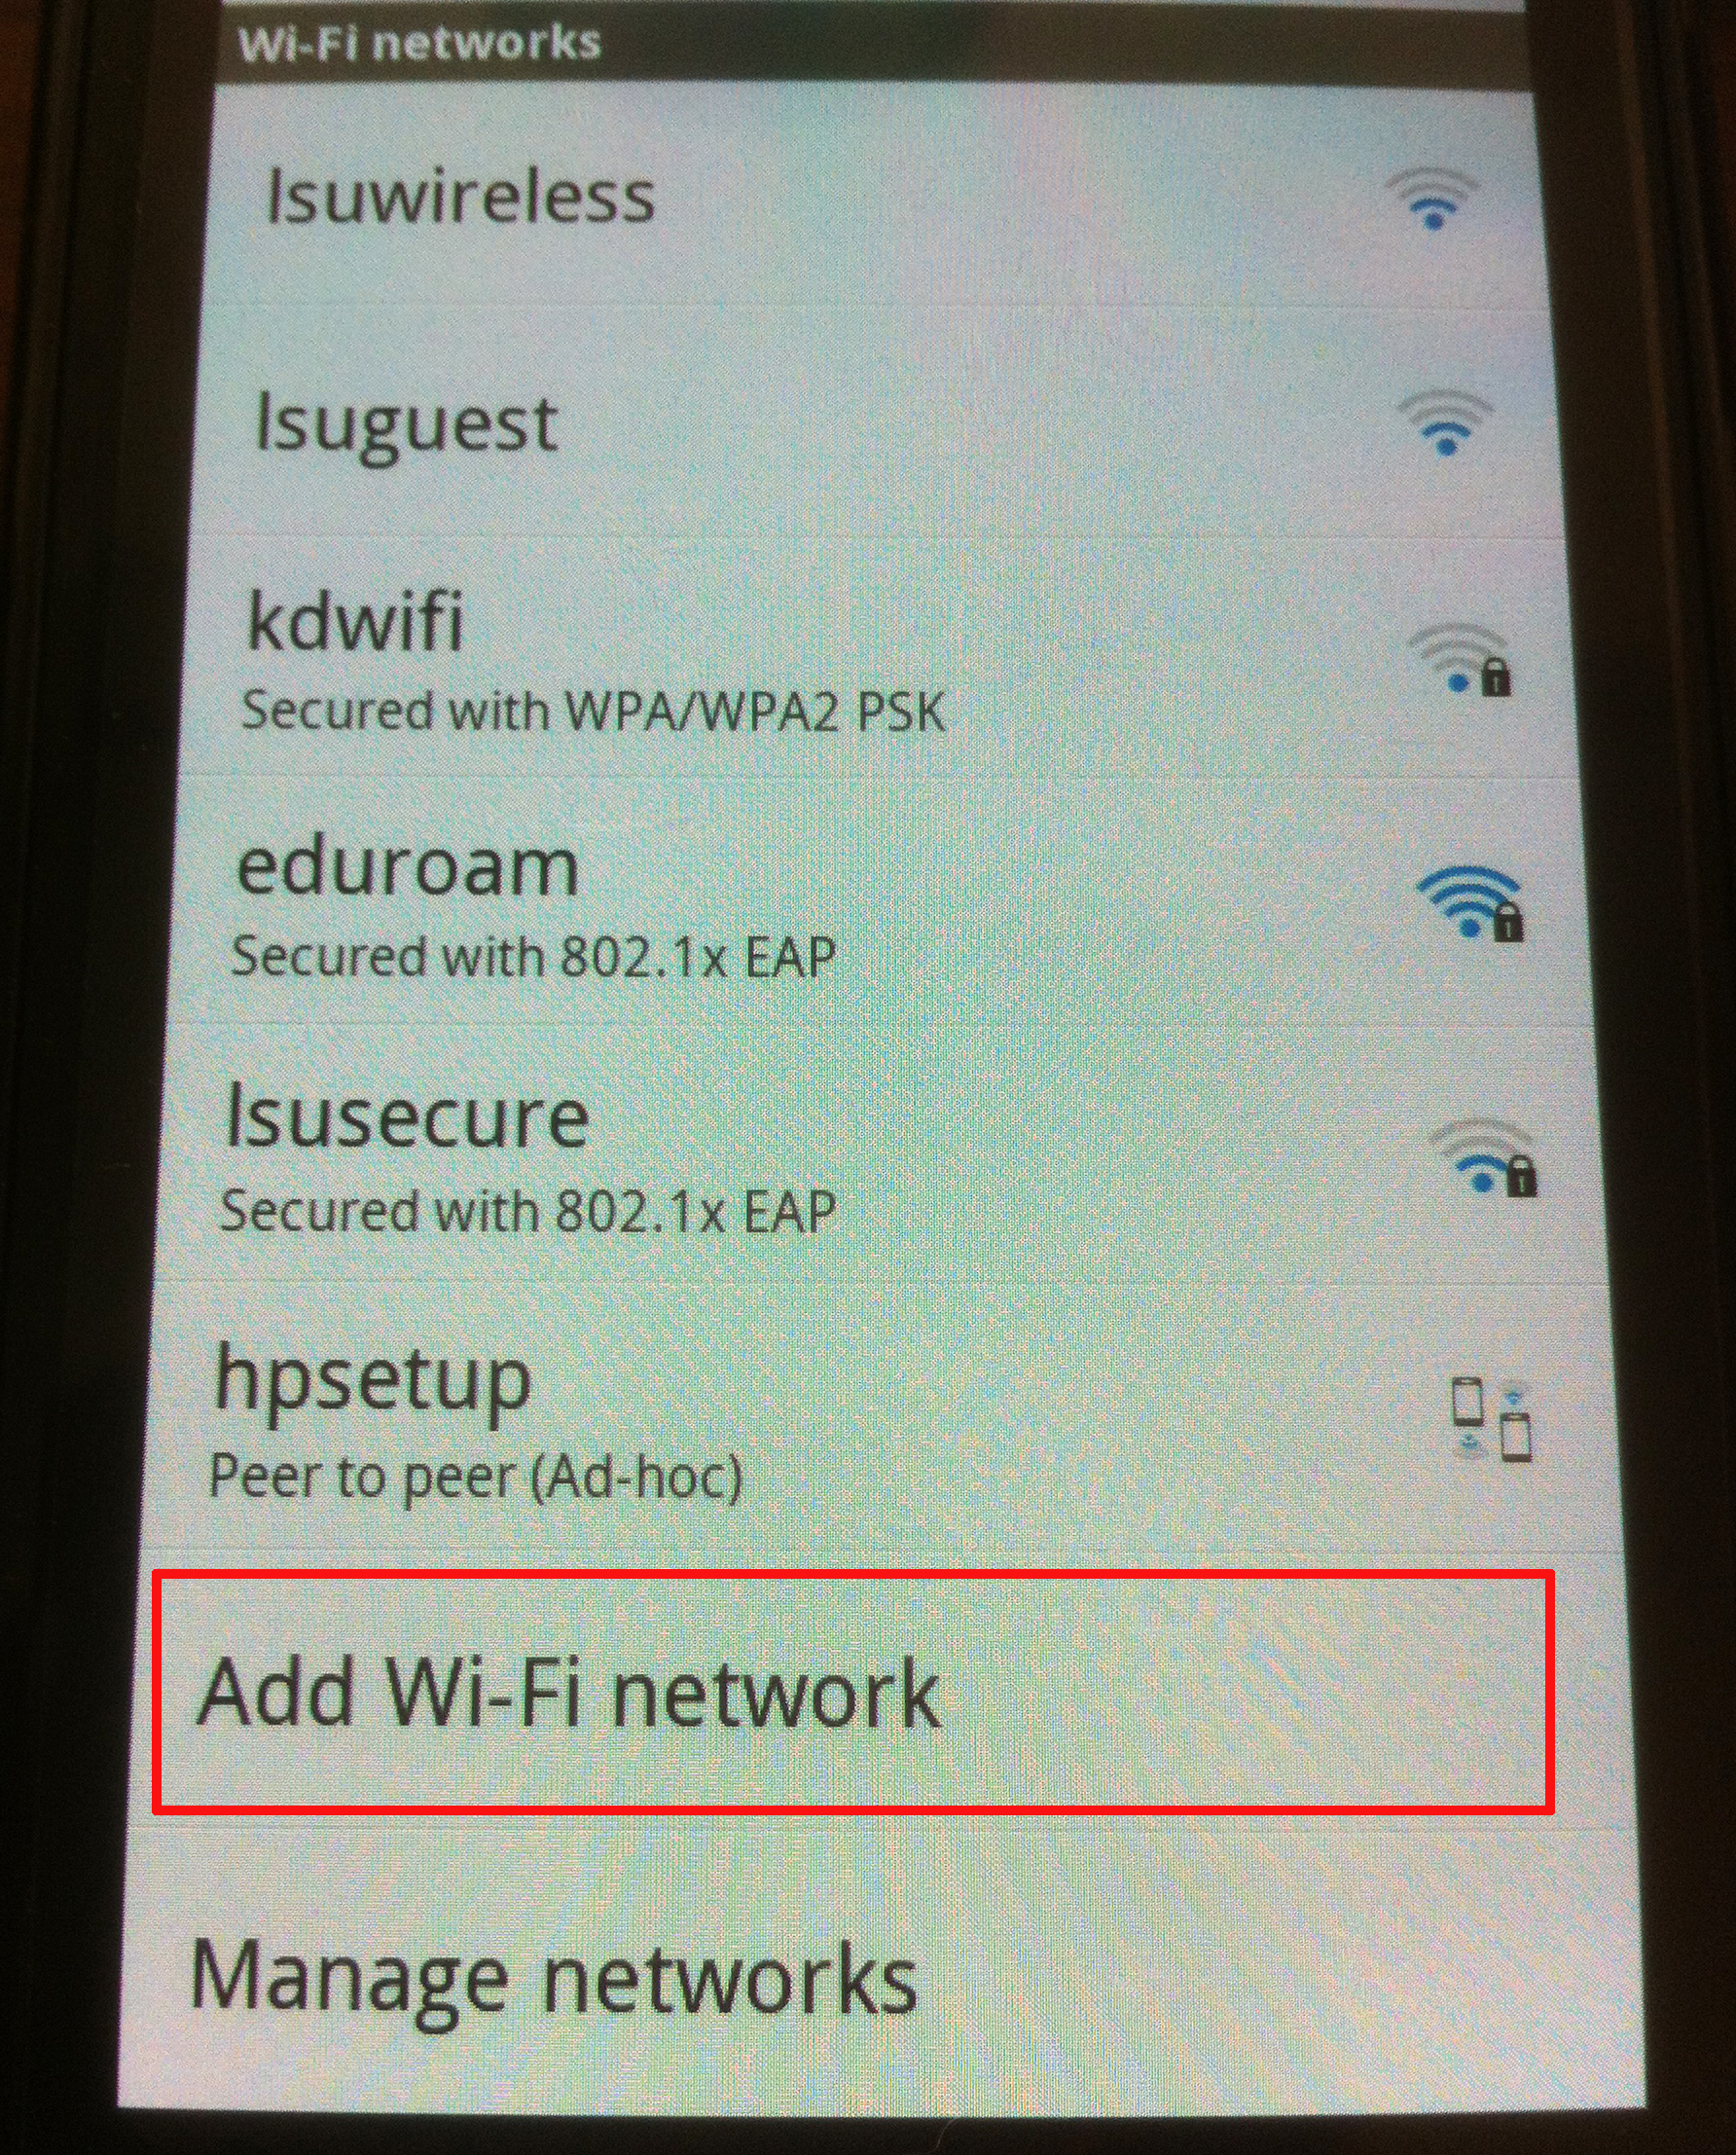  the add wi-fi network option. 